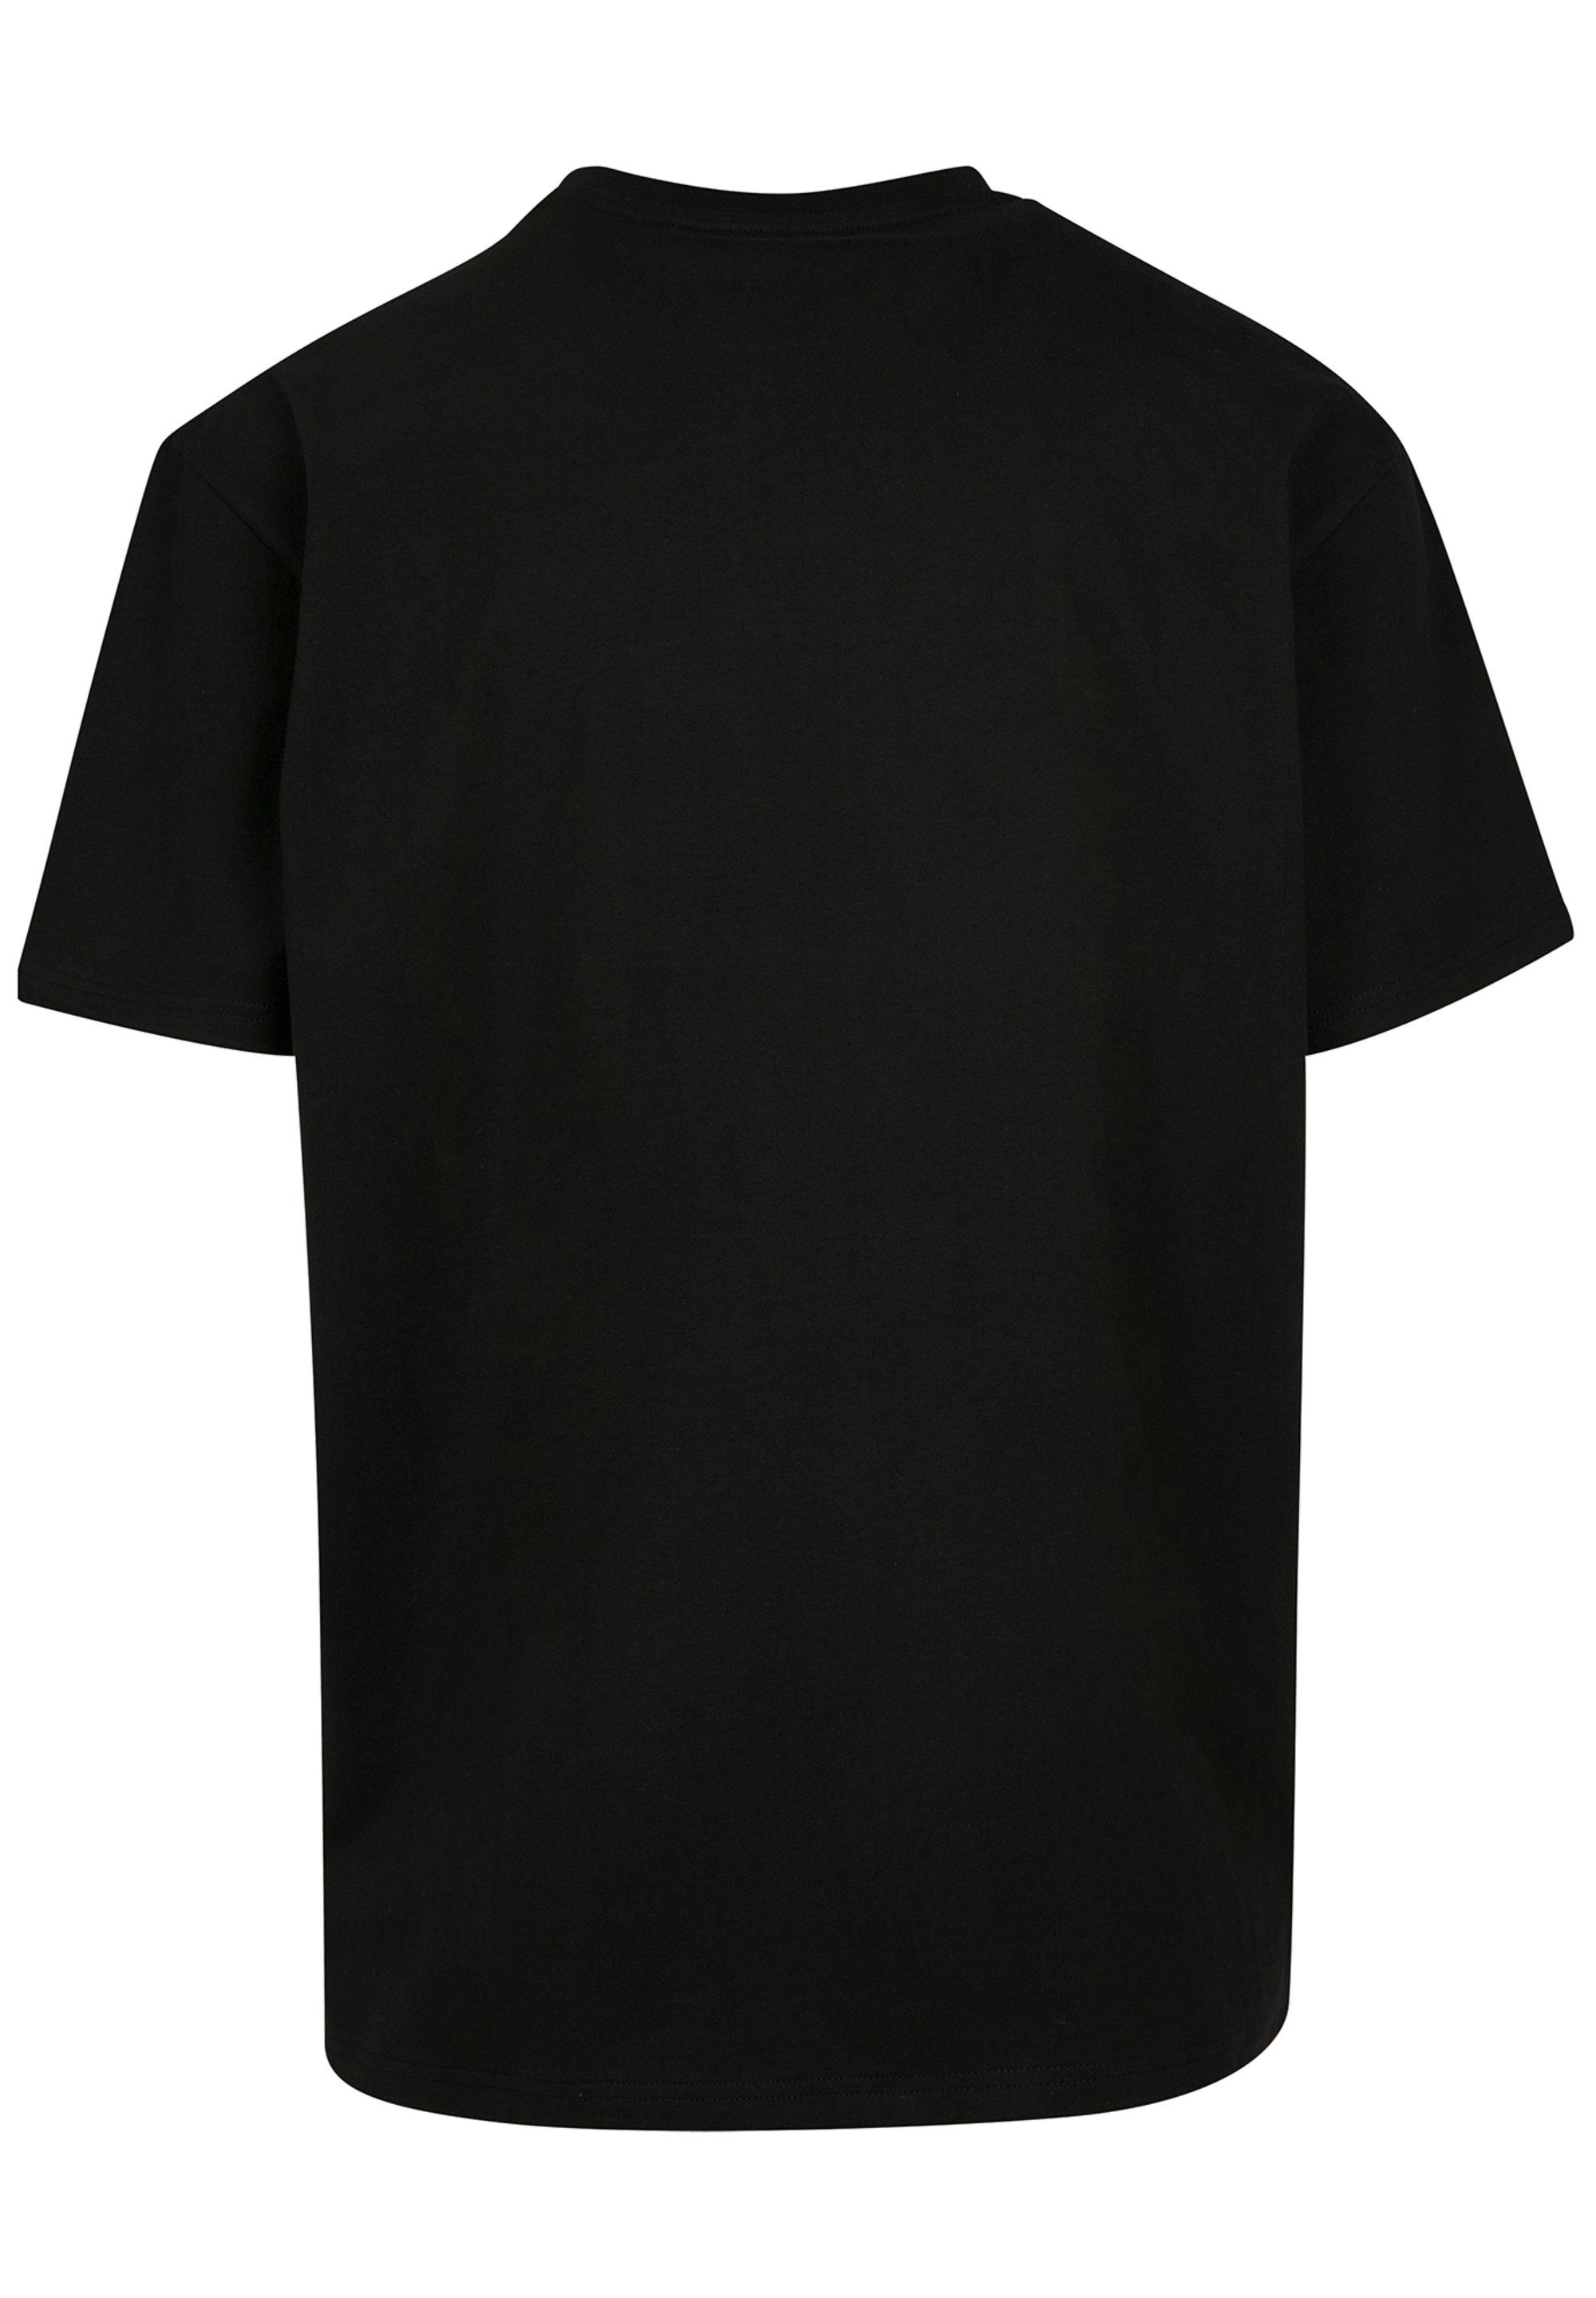 F4NT4STIC T-Shirt OVERSIZE schwarz TEE Rubber Duck Print Wizard